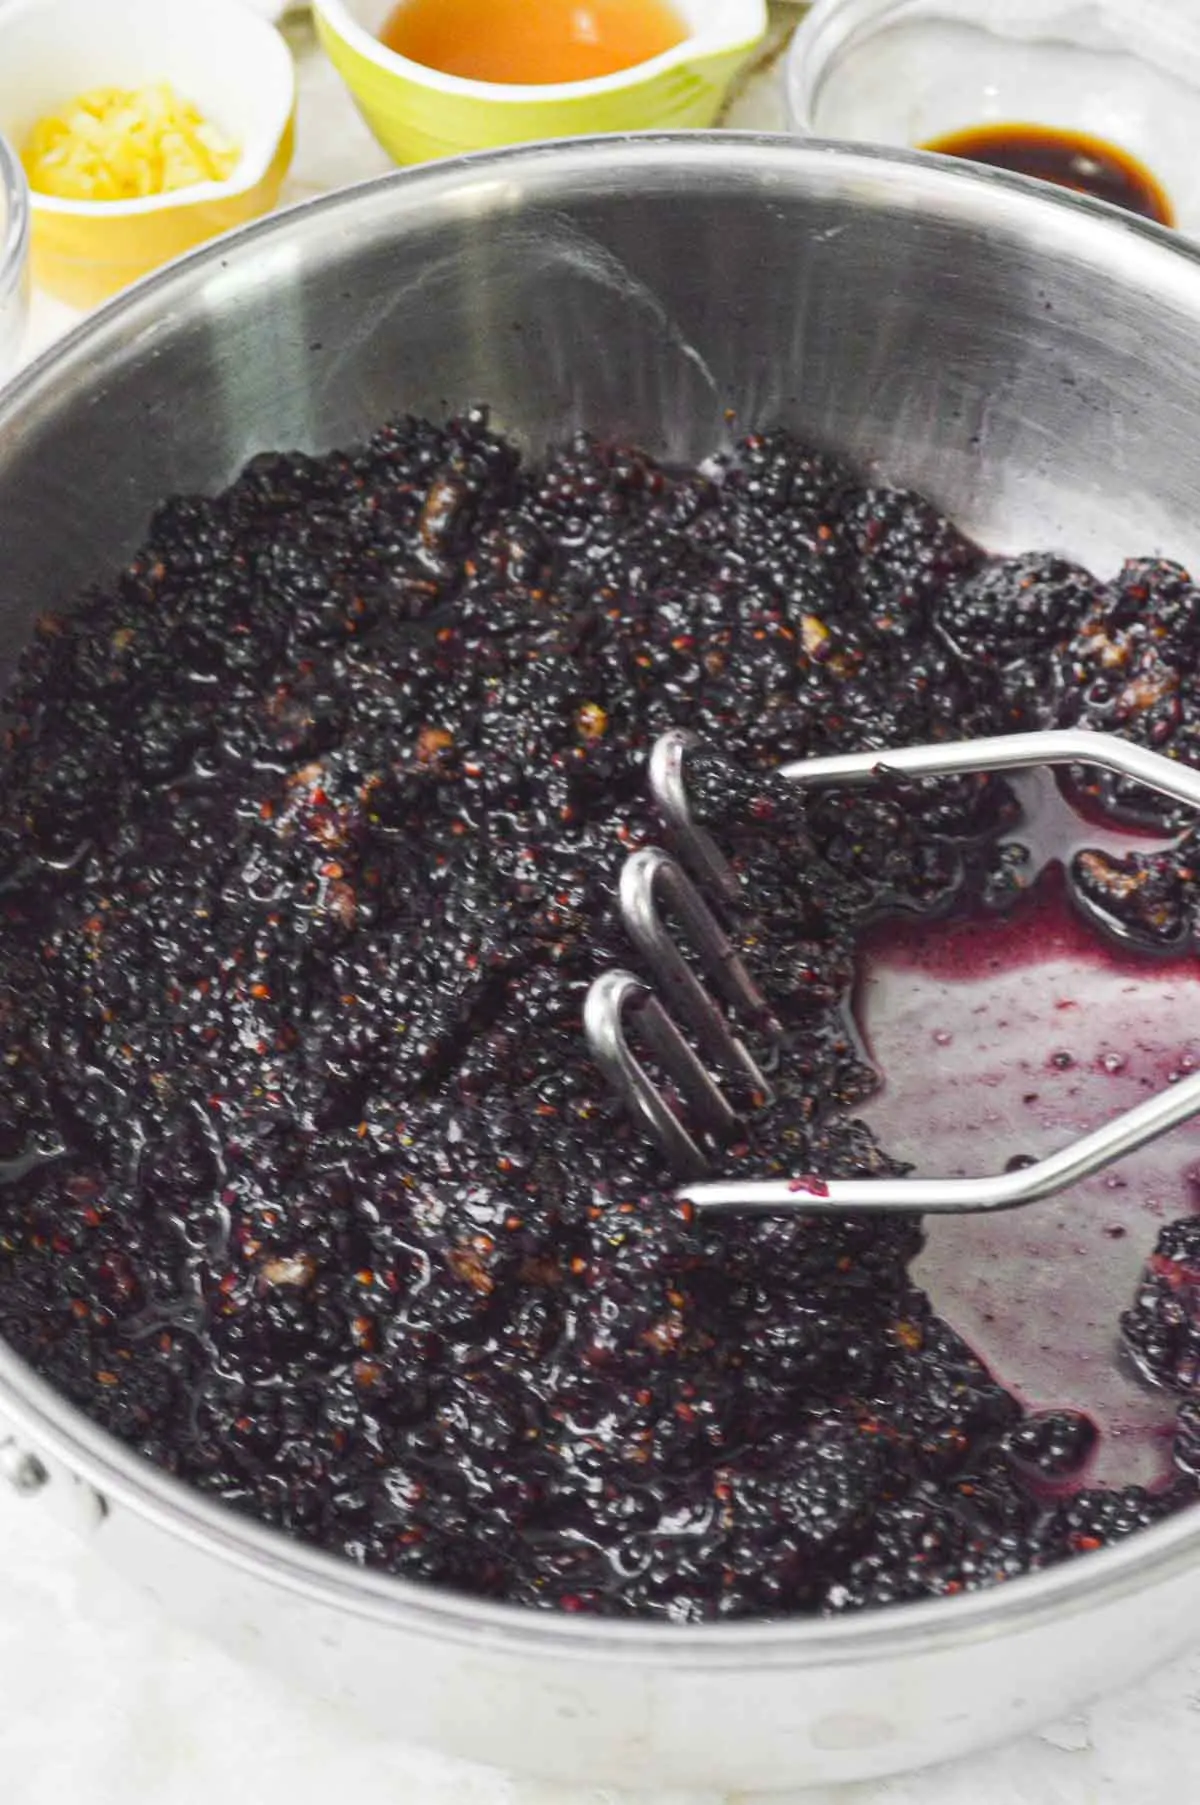 Mashing blackberries in a sauce pot.